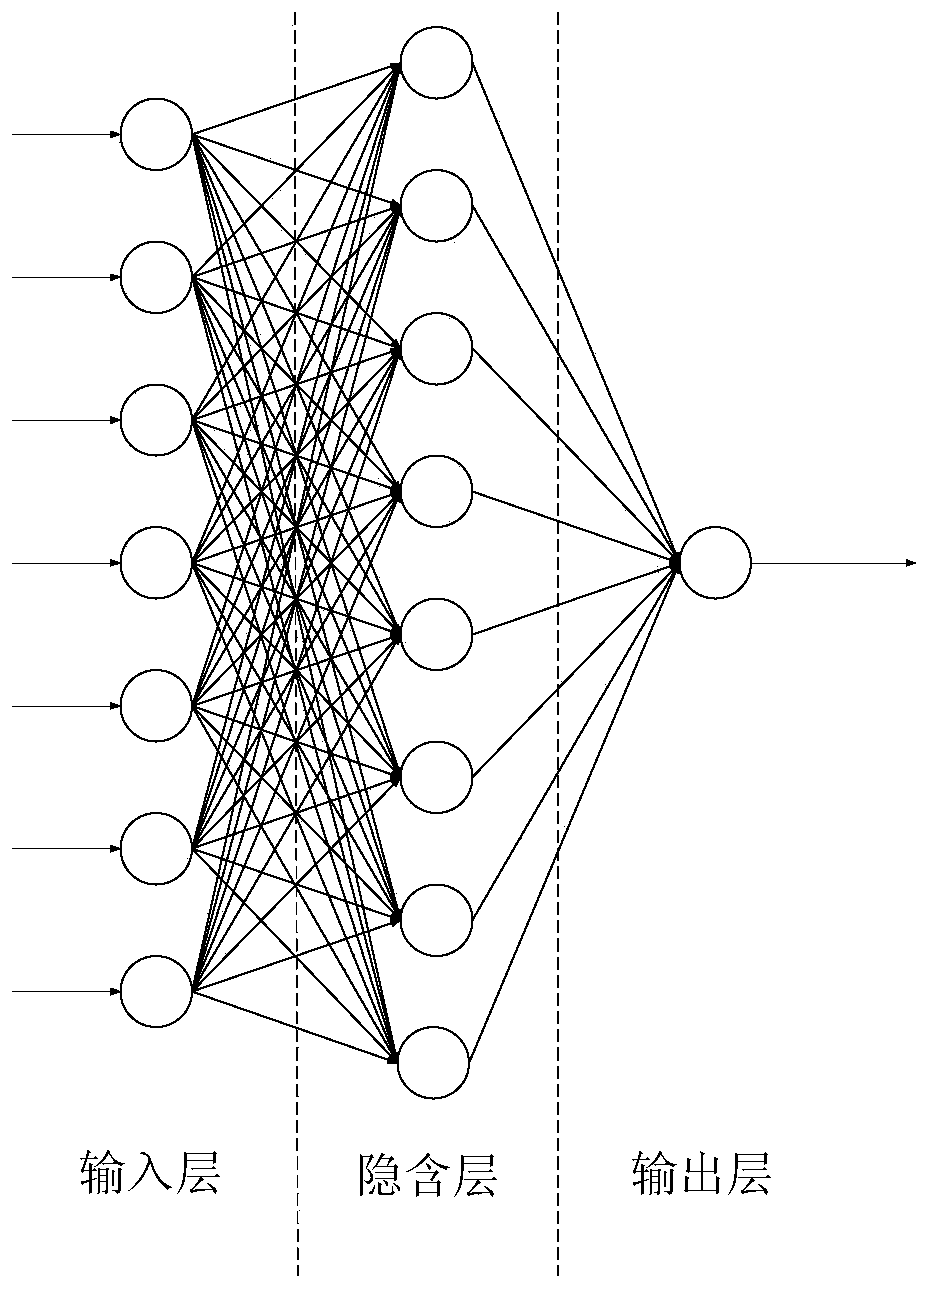 Indoor illumination estimation method based on BP neural network algorithm